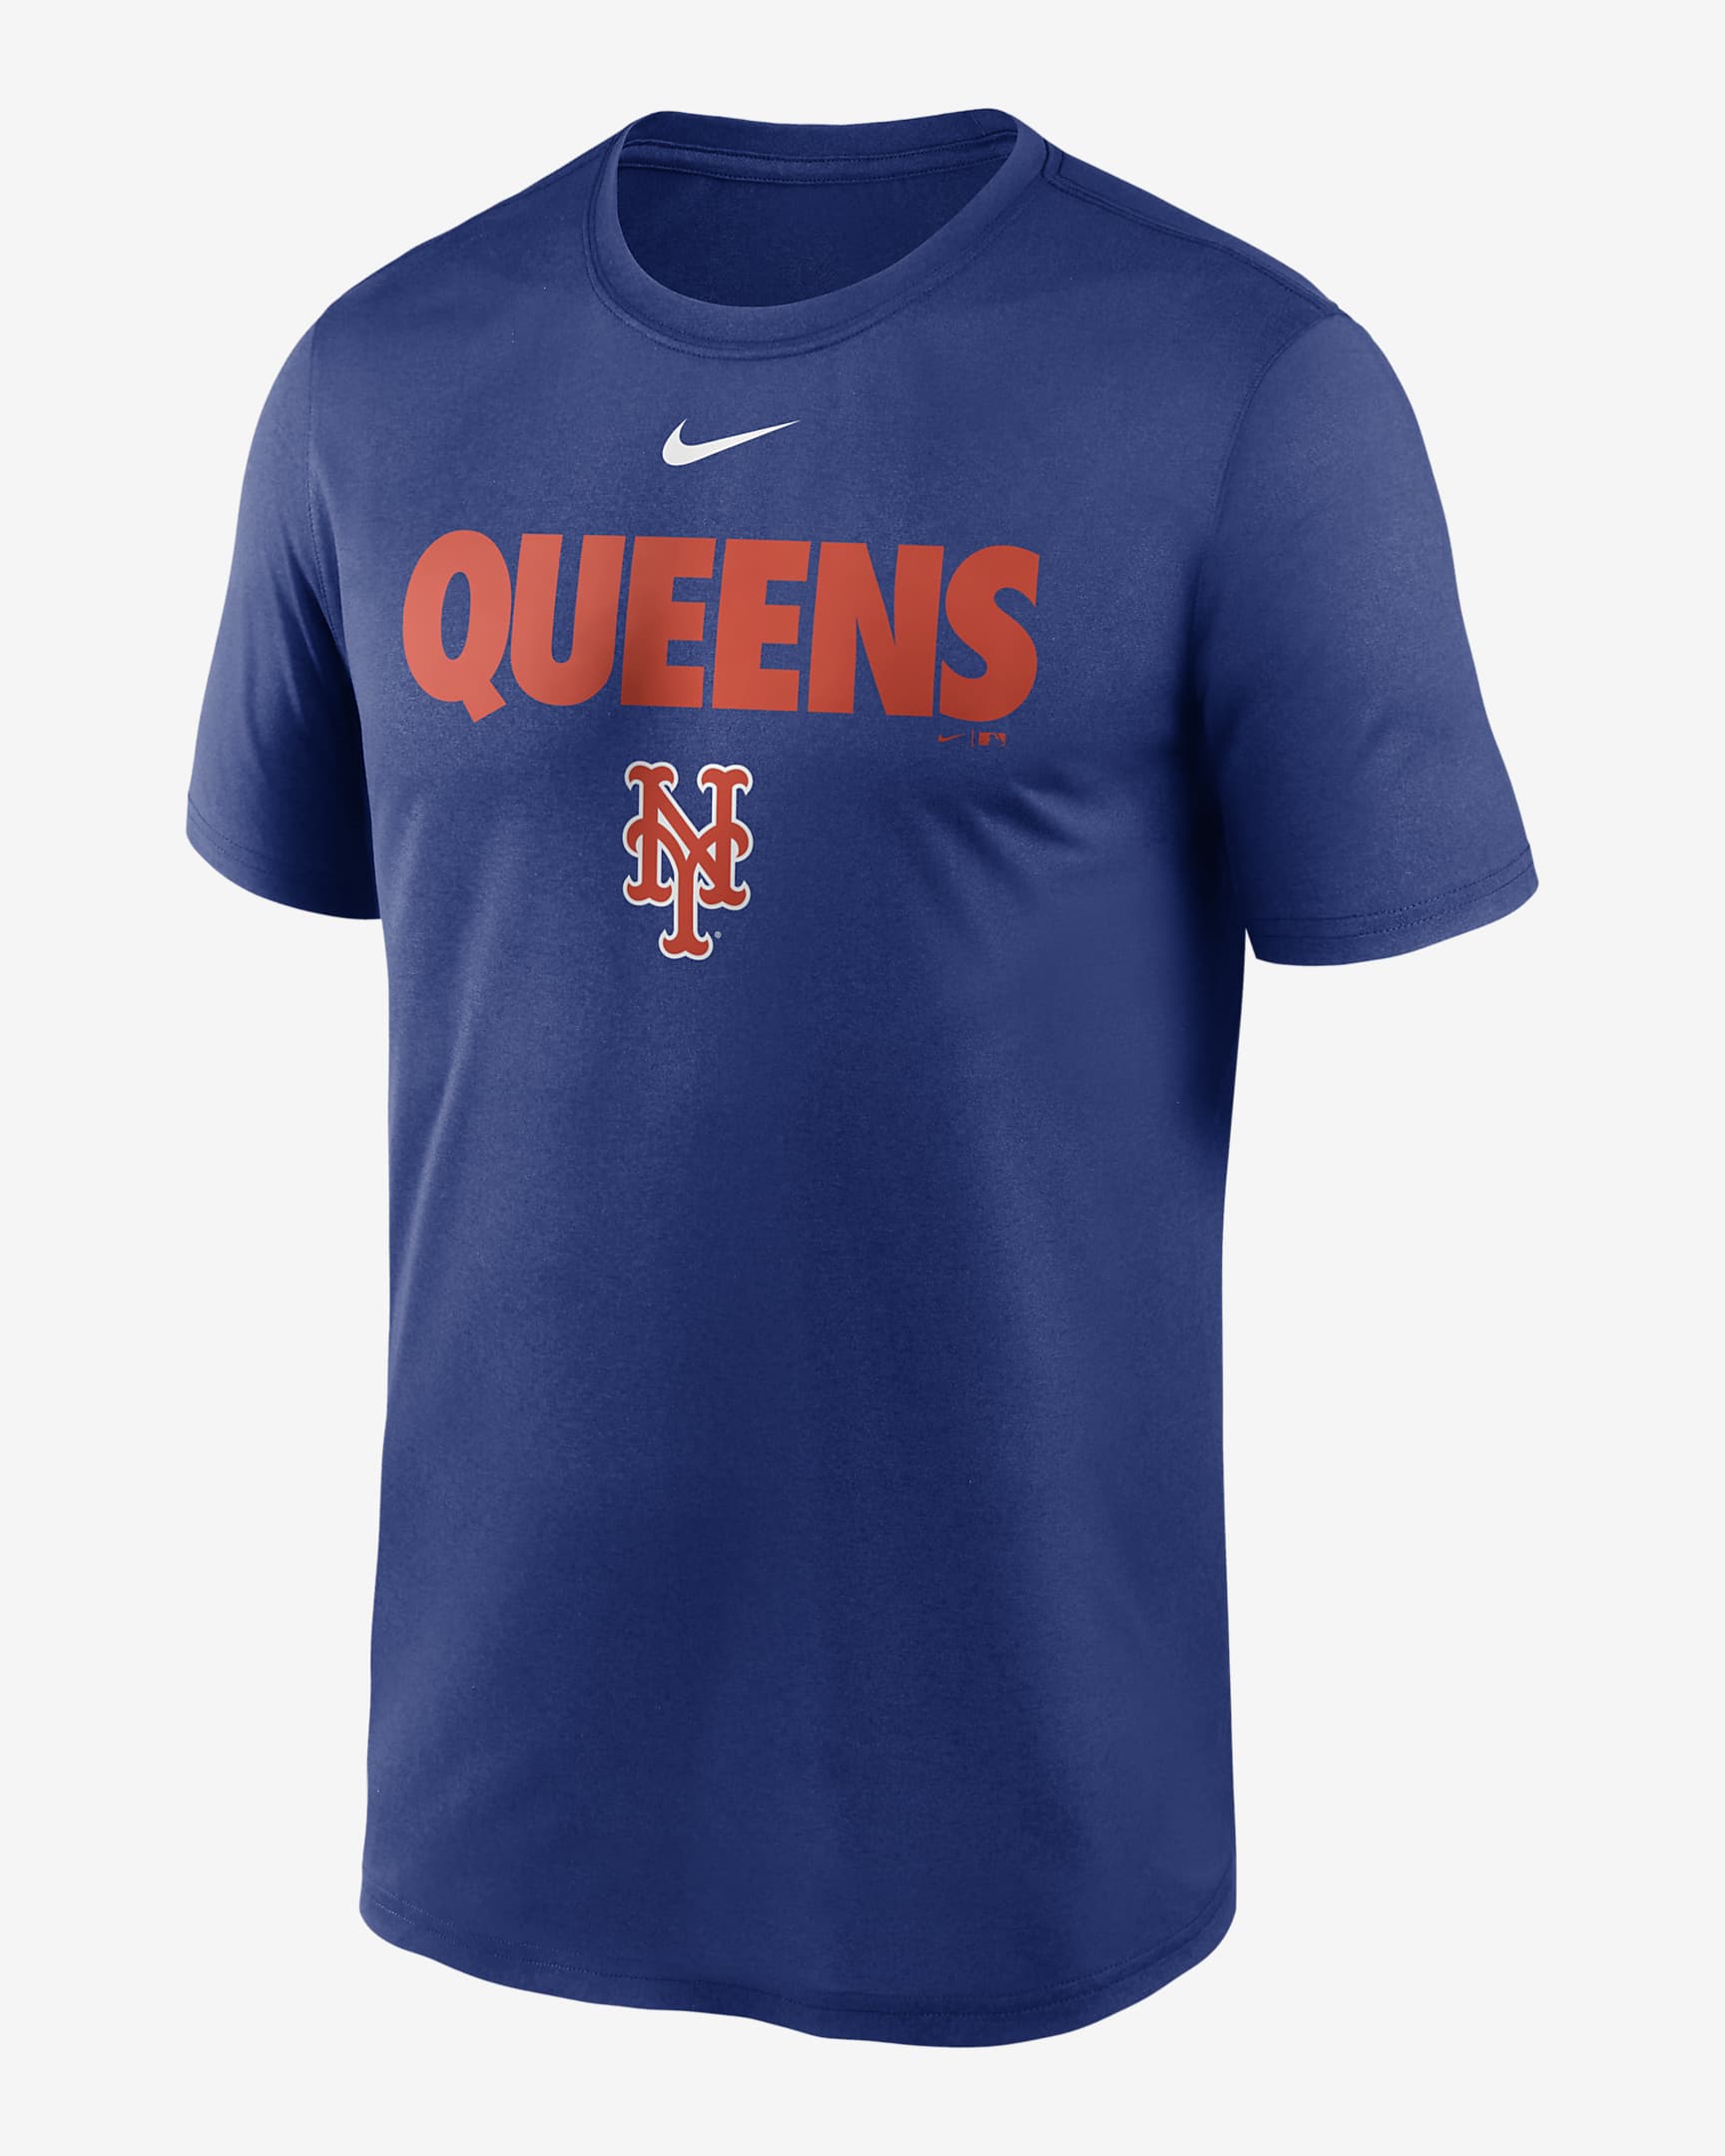 Nike SB Dunk High New York Mets Shirts Hats Clothing Outfits